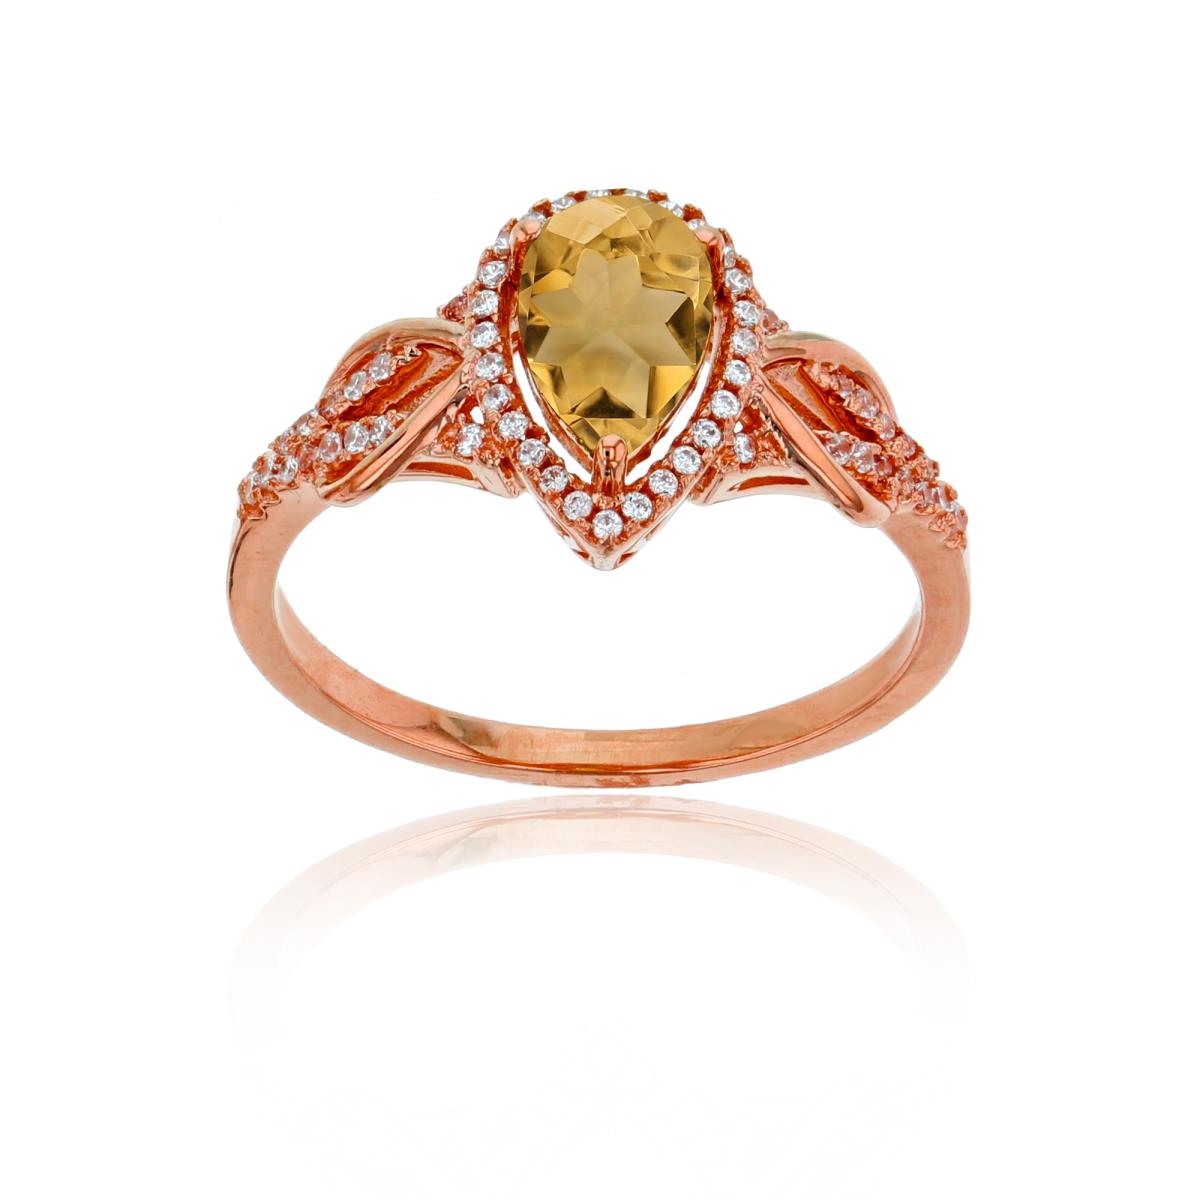 10K Rose Gold 0.17CTTW Rnd Diamond & 8x5mm Pear Cut Citrine Knot Sides Ring